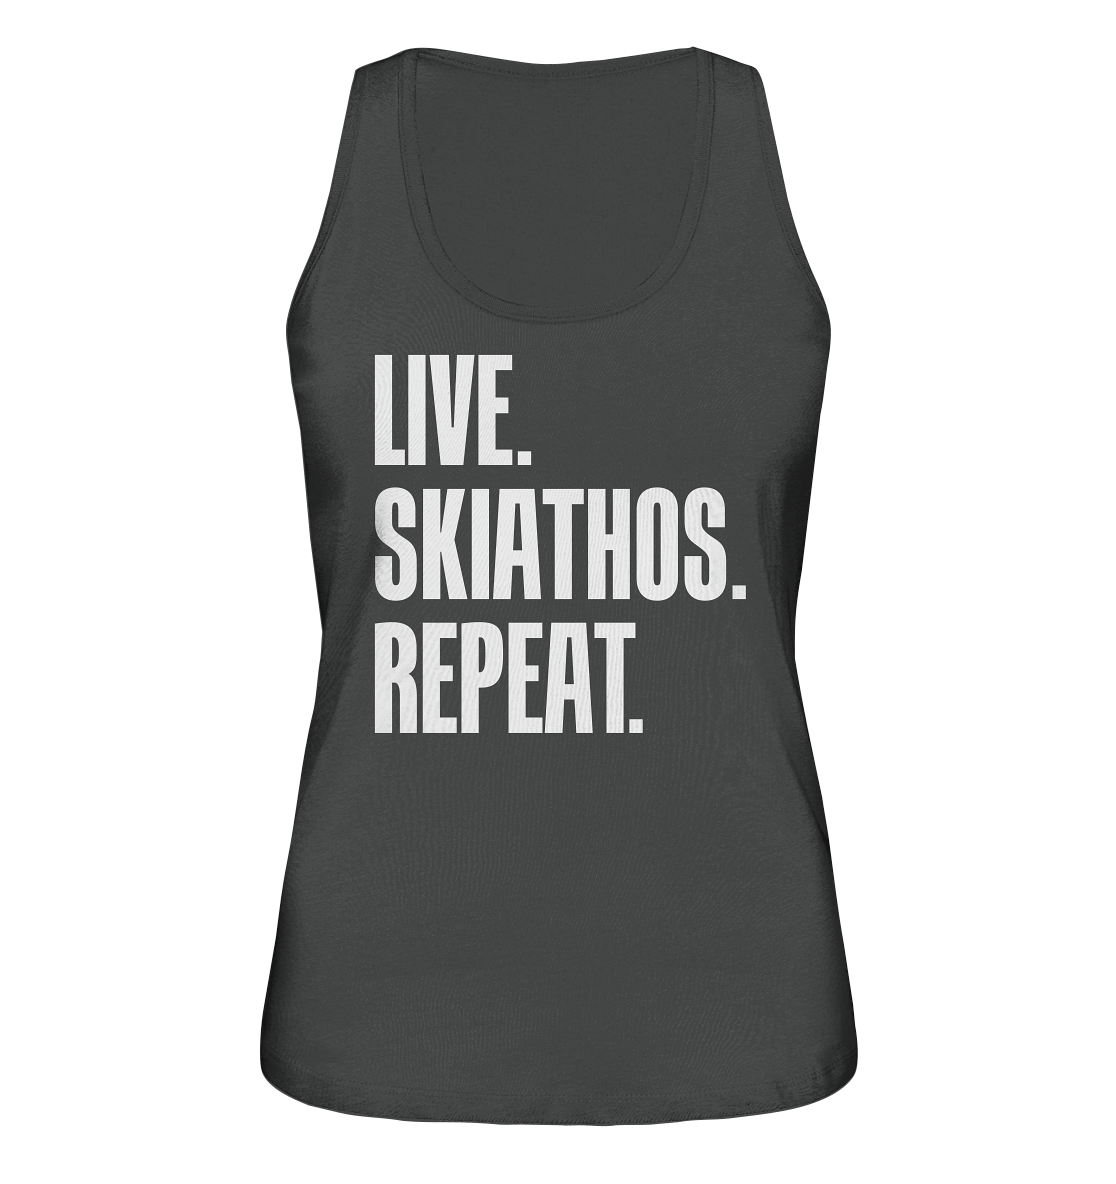 LIVE. SKIATHOS. REPEAT. - Ladies organic tank top